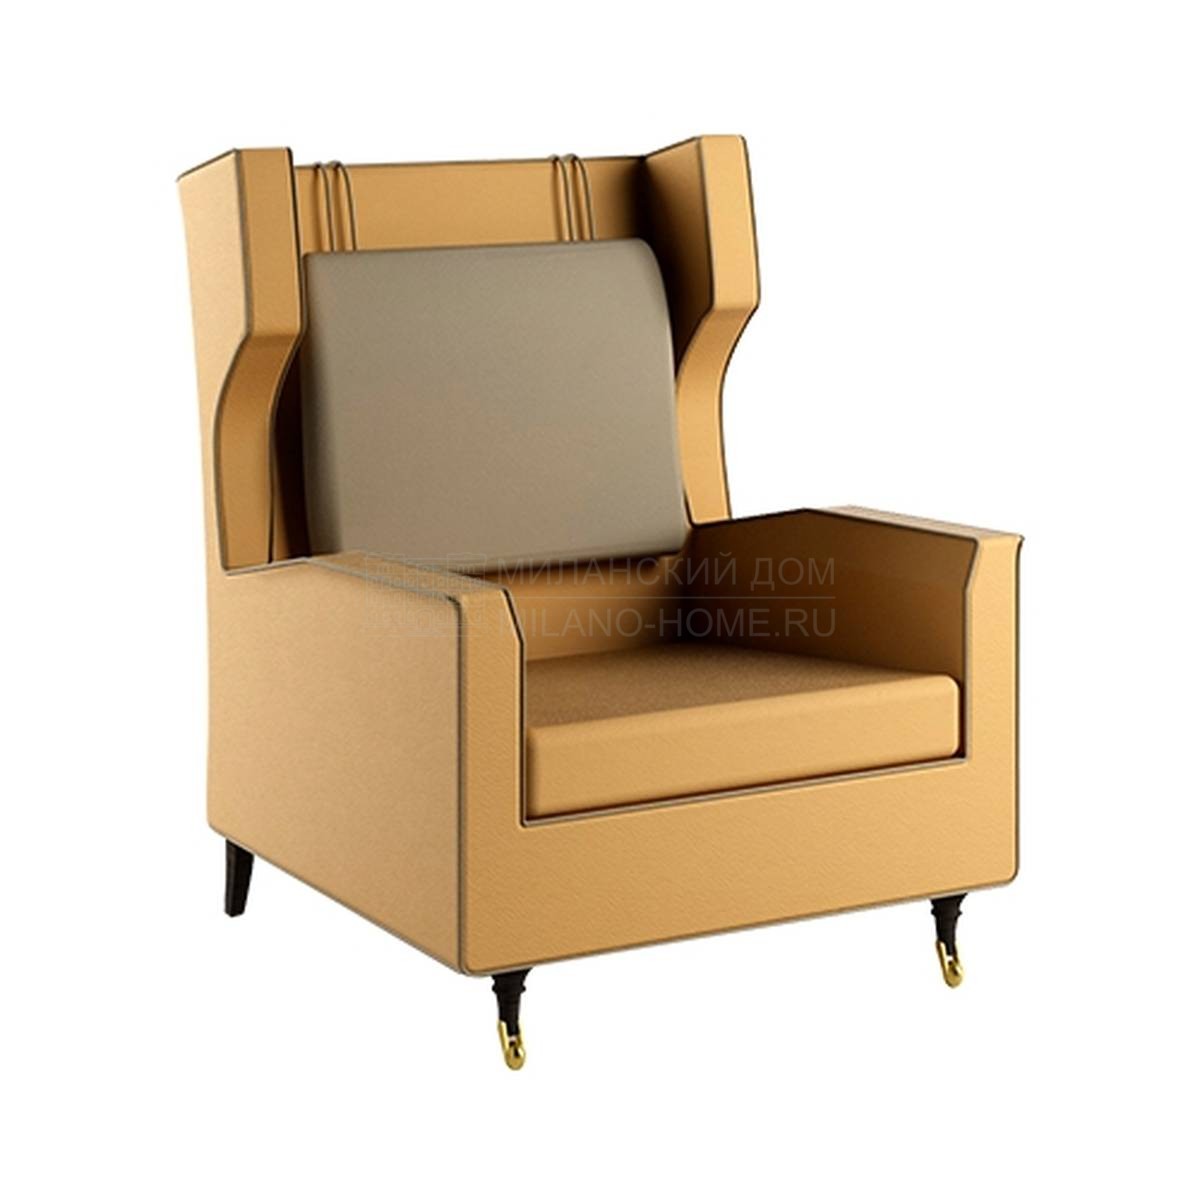 Кожаное кресло Garibaldi armchair из Италии фабрики PAOLO CASTELLI